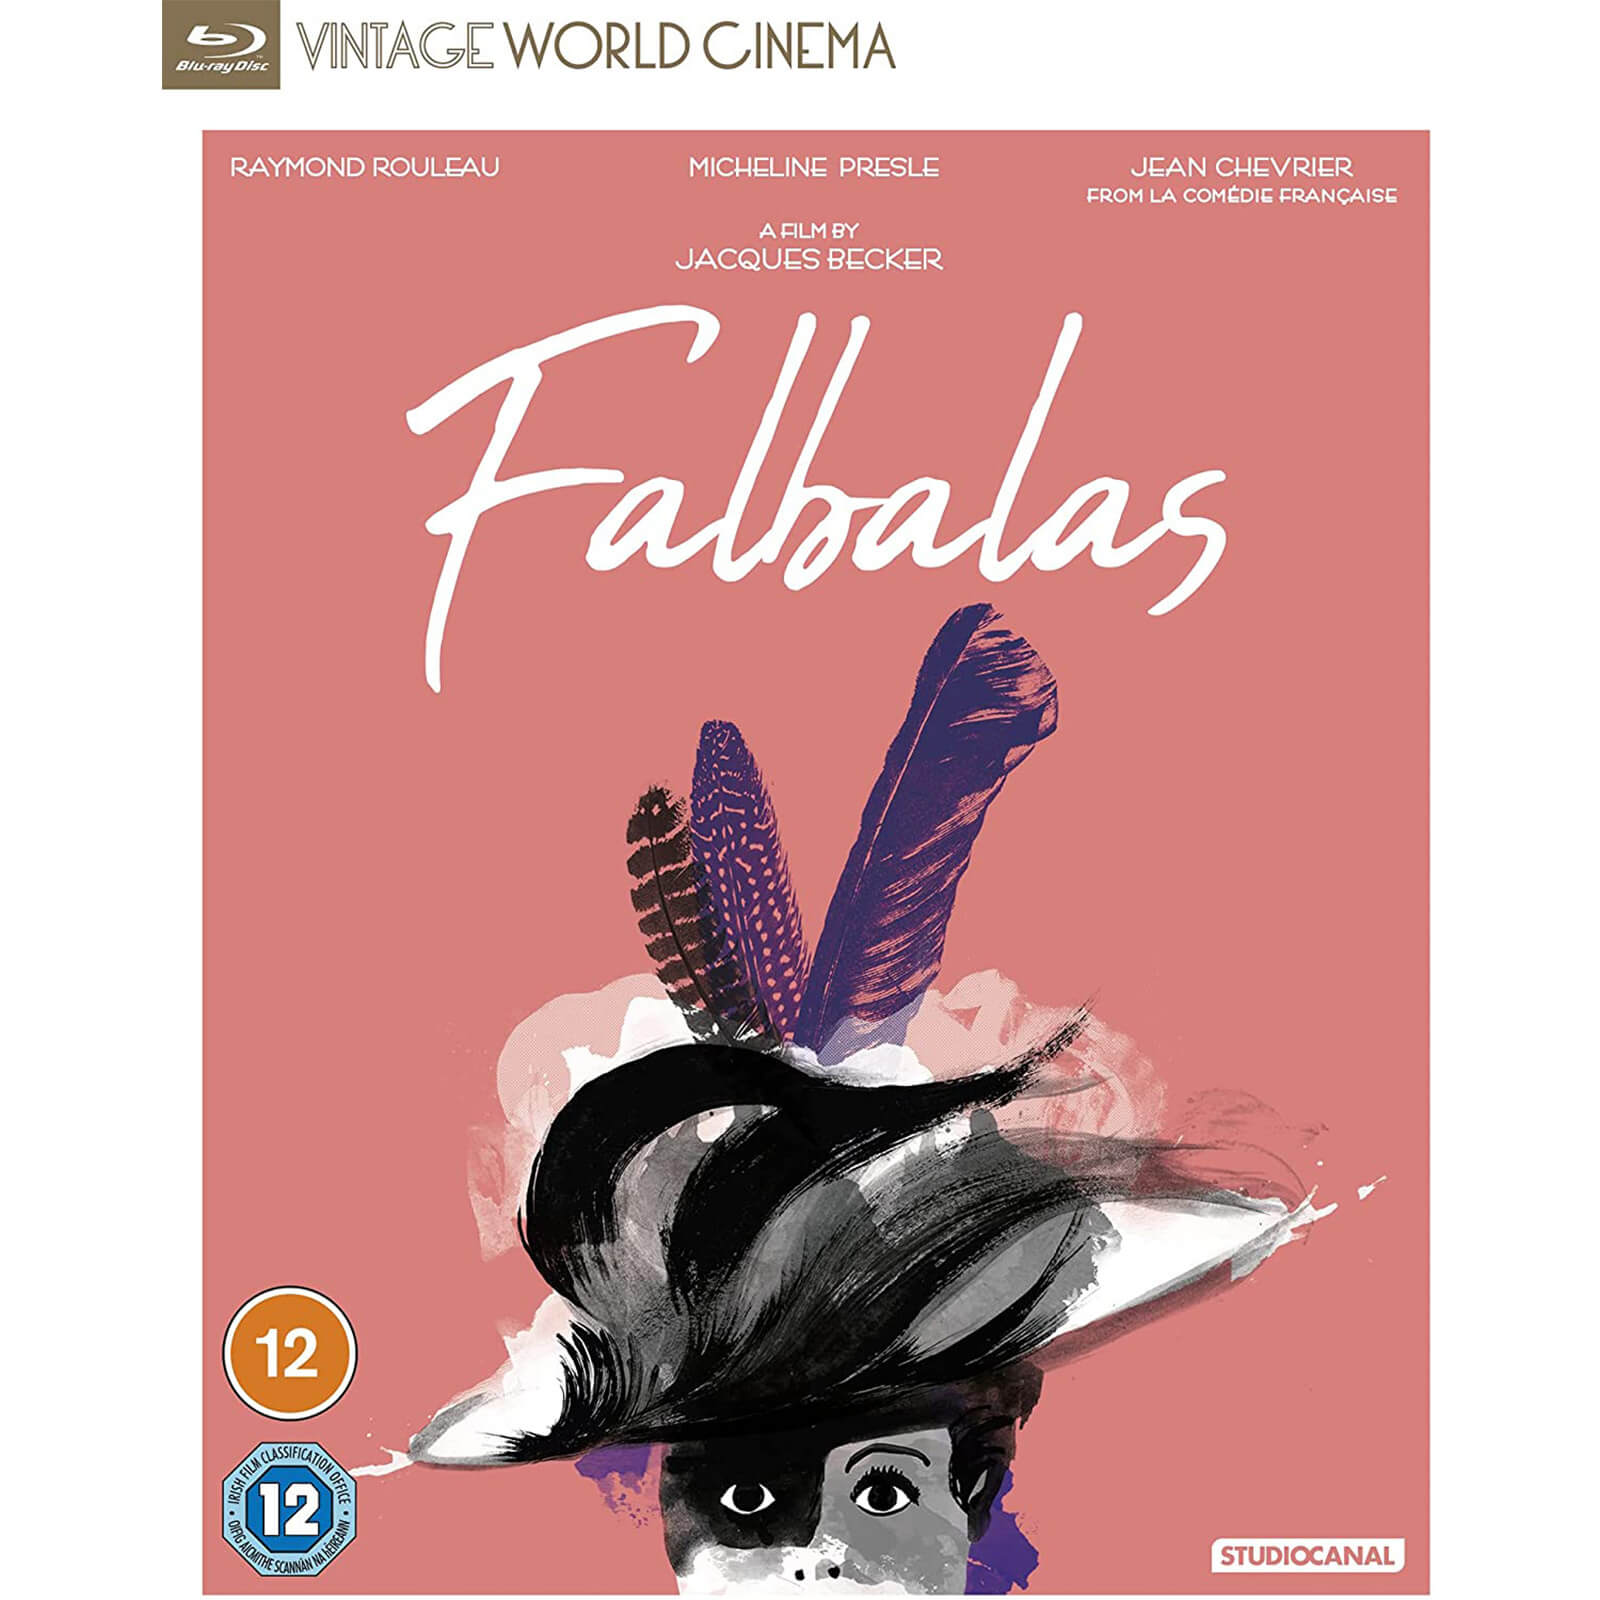 Falbalas (Vintage World Cinema) von Vintage World Cinema